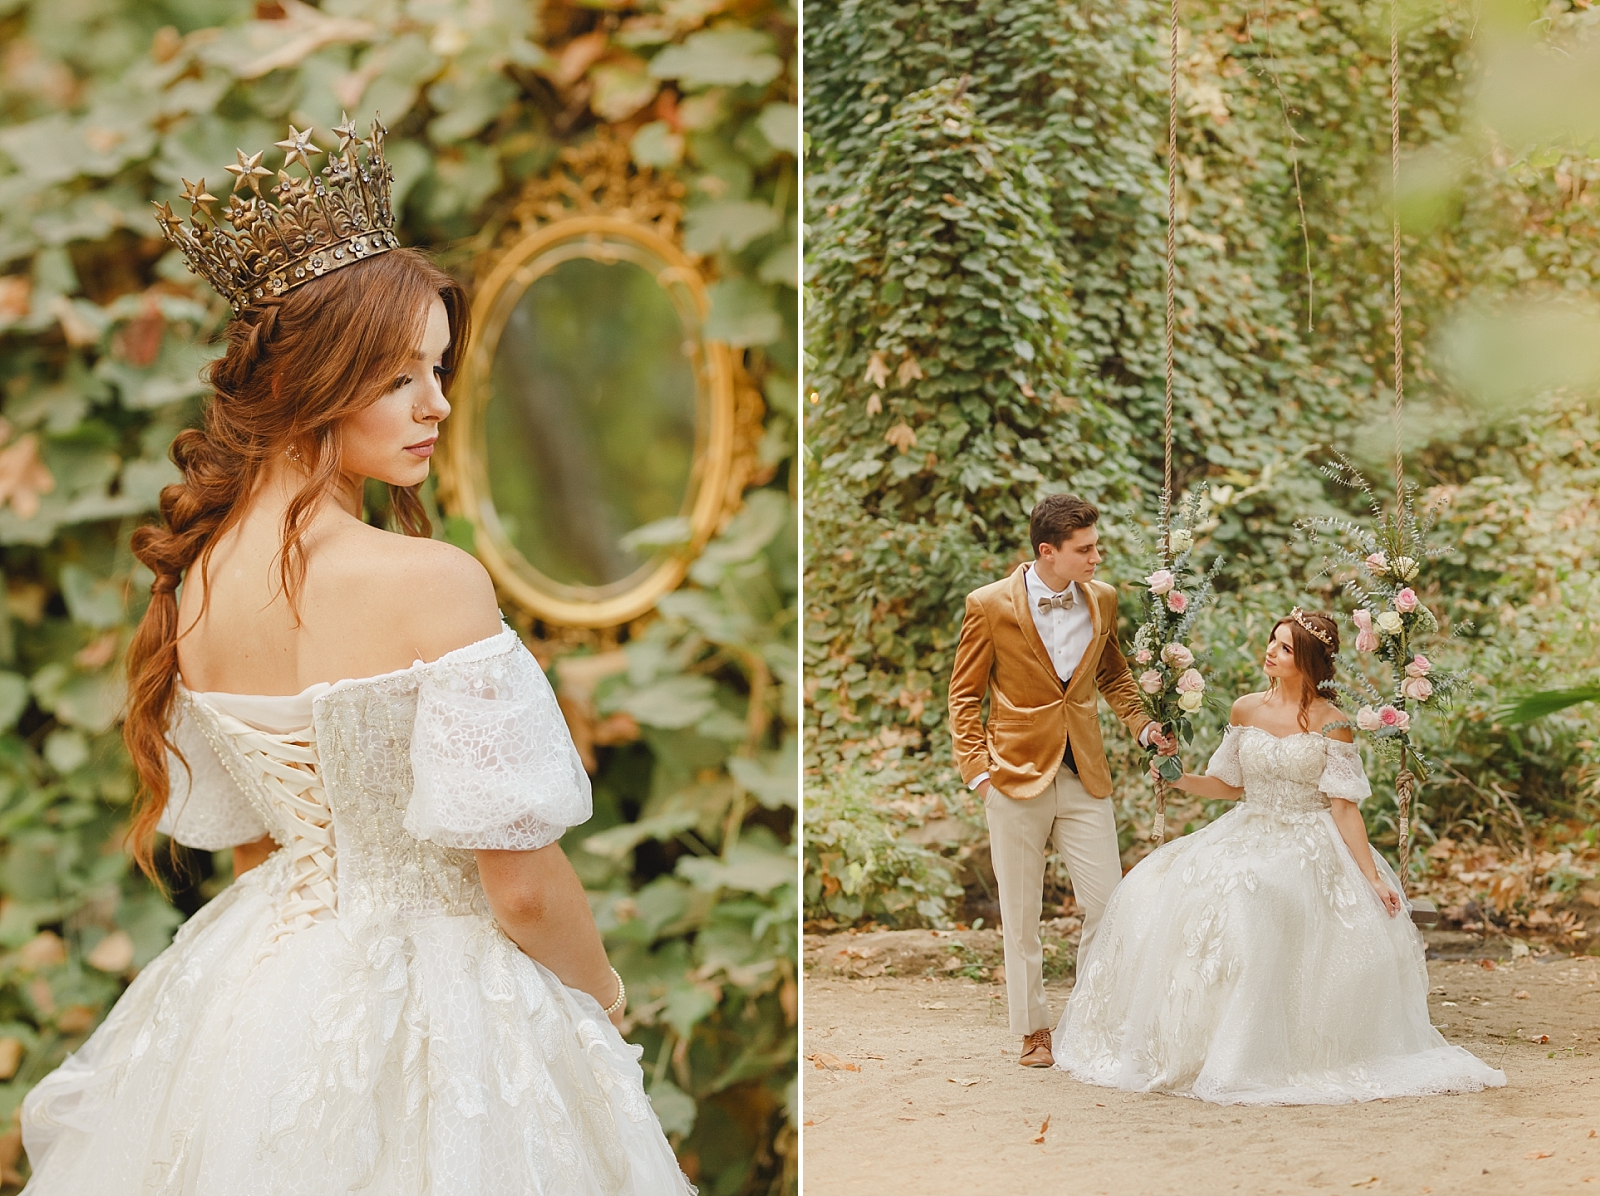 Luna Bella Ranch Temecula, California Fairytale Wedding Inspiration